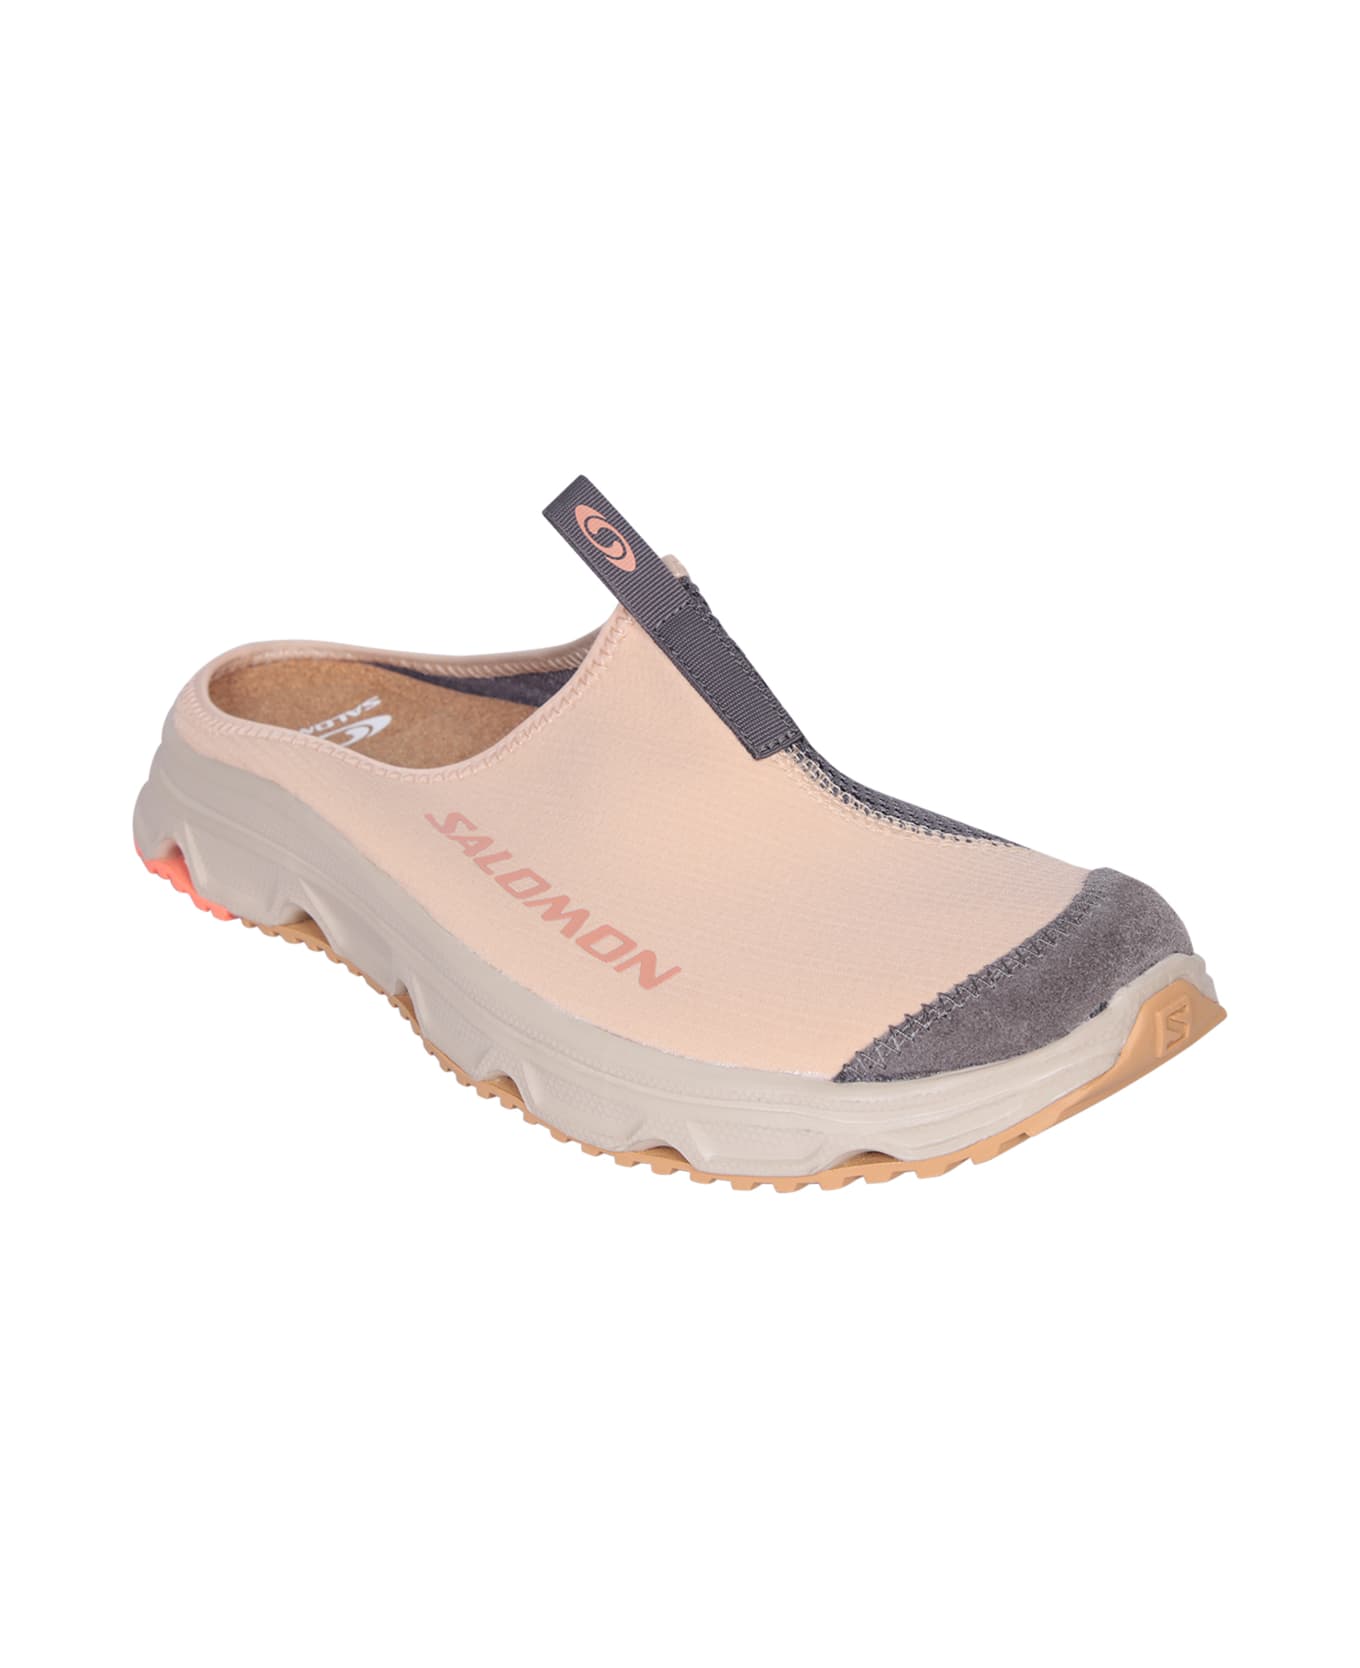 Salomon Rx Slide 3.0 Sneakers In Pink - Pink その他各種シューズ